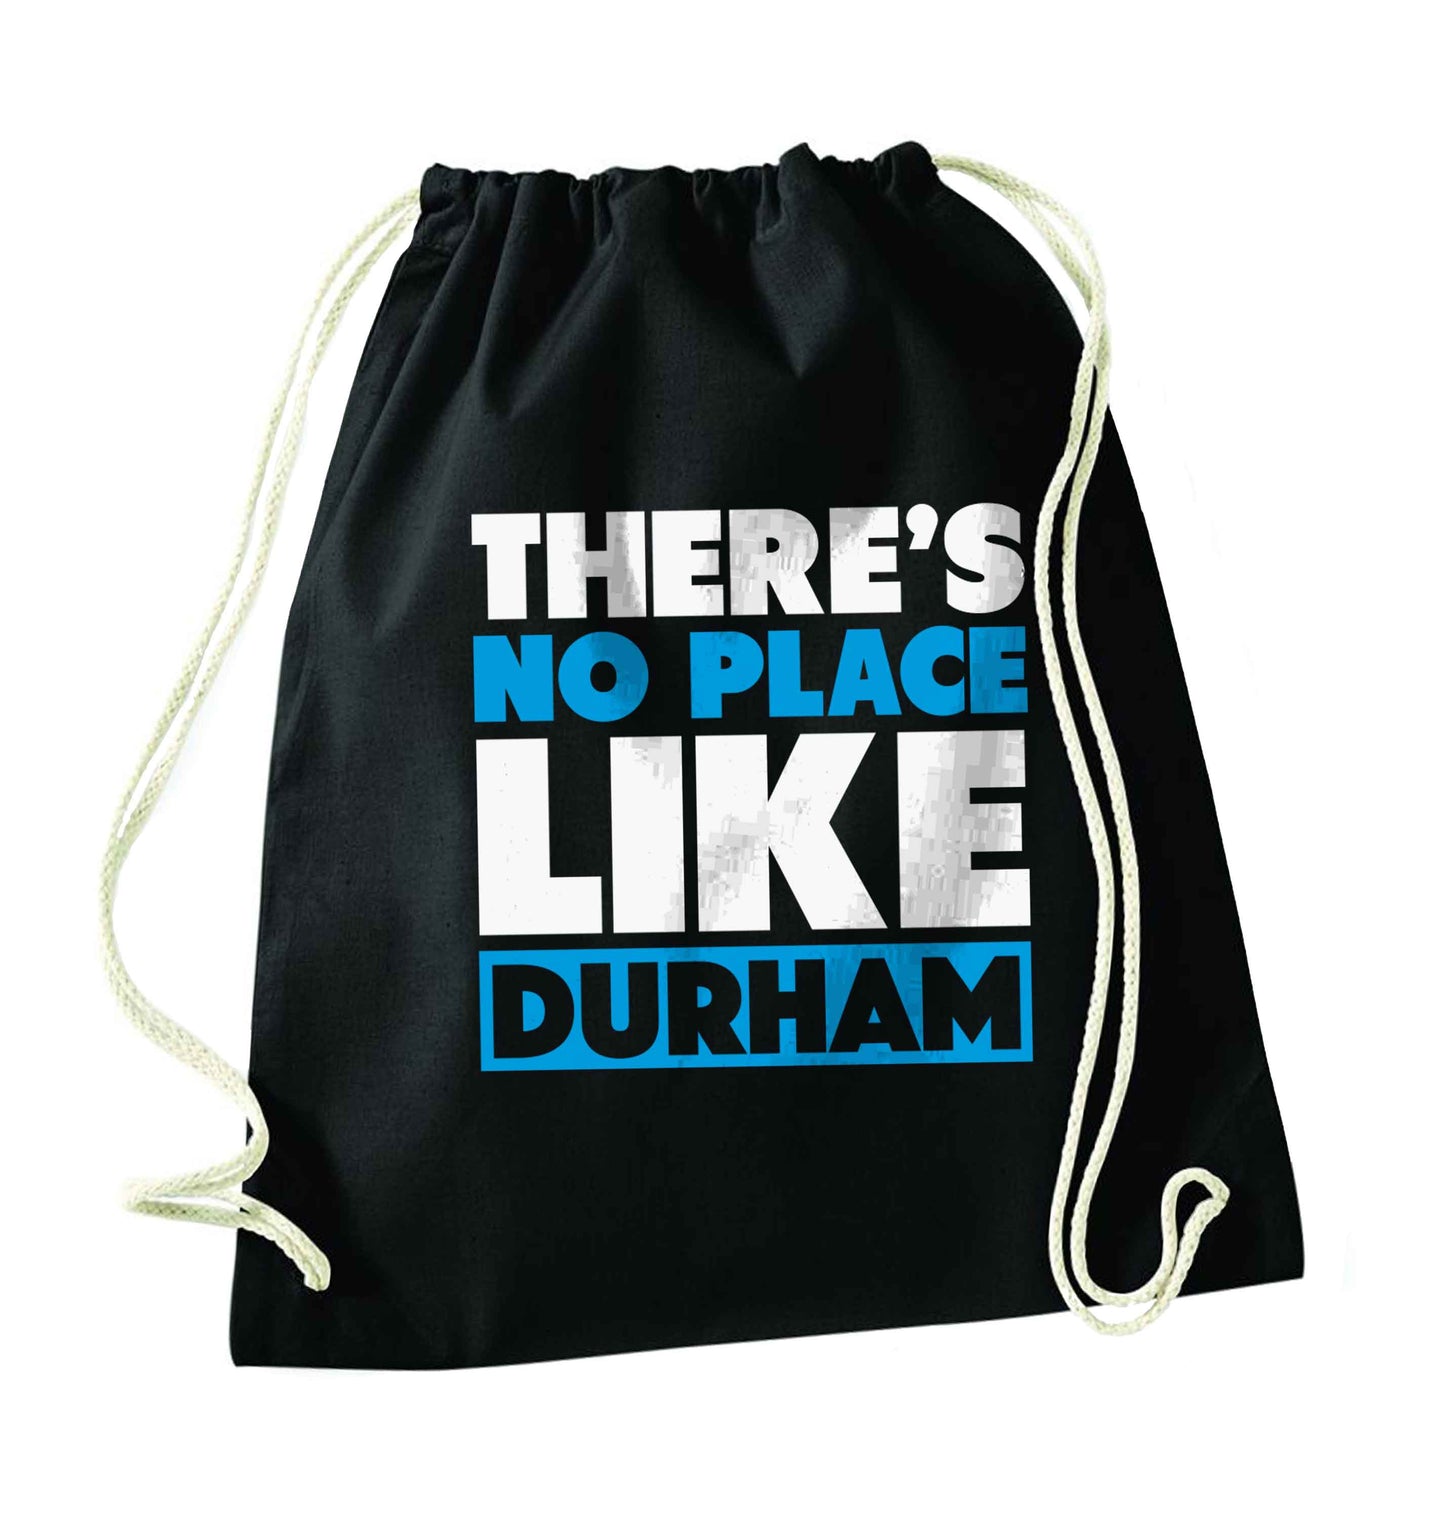 There's no place like Durham black drawstring bag